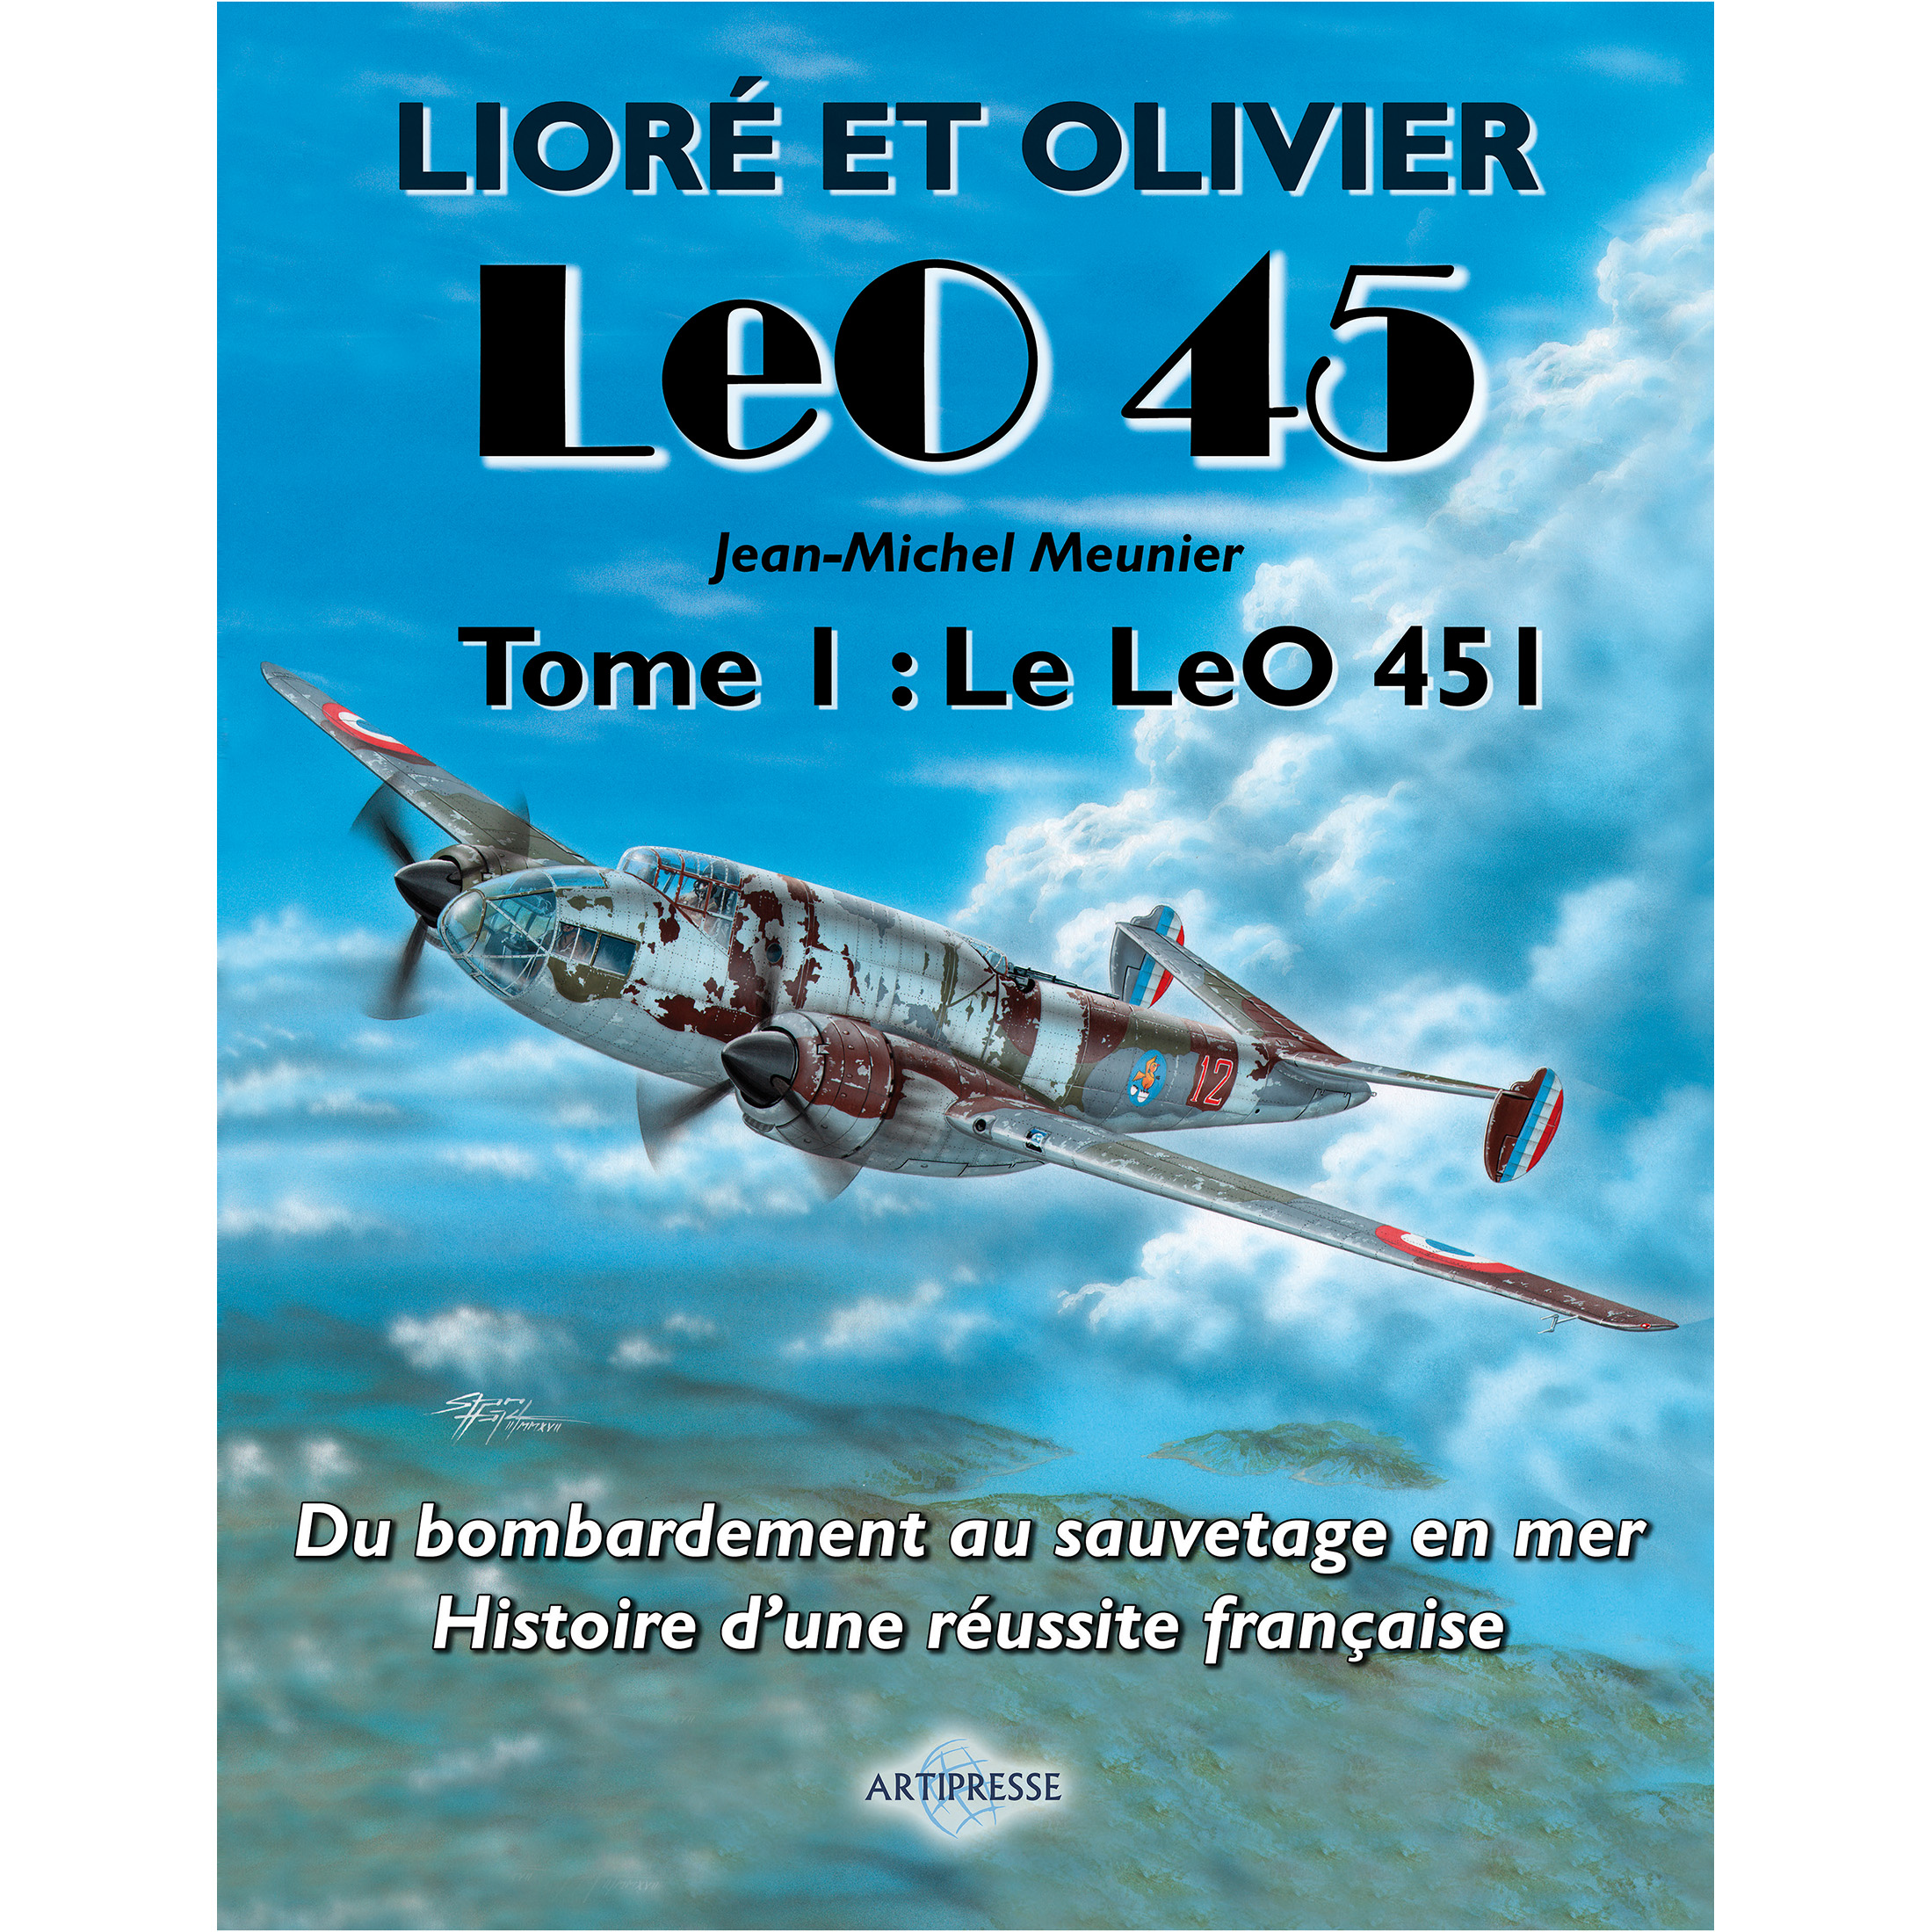 Les Lioré et Olivier Leo 45, Tome I : Le LeO 451 publikace je ve francouštině